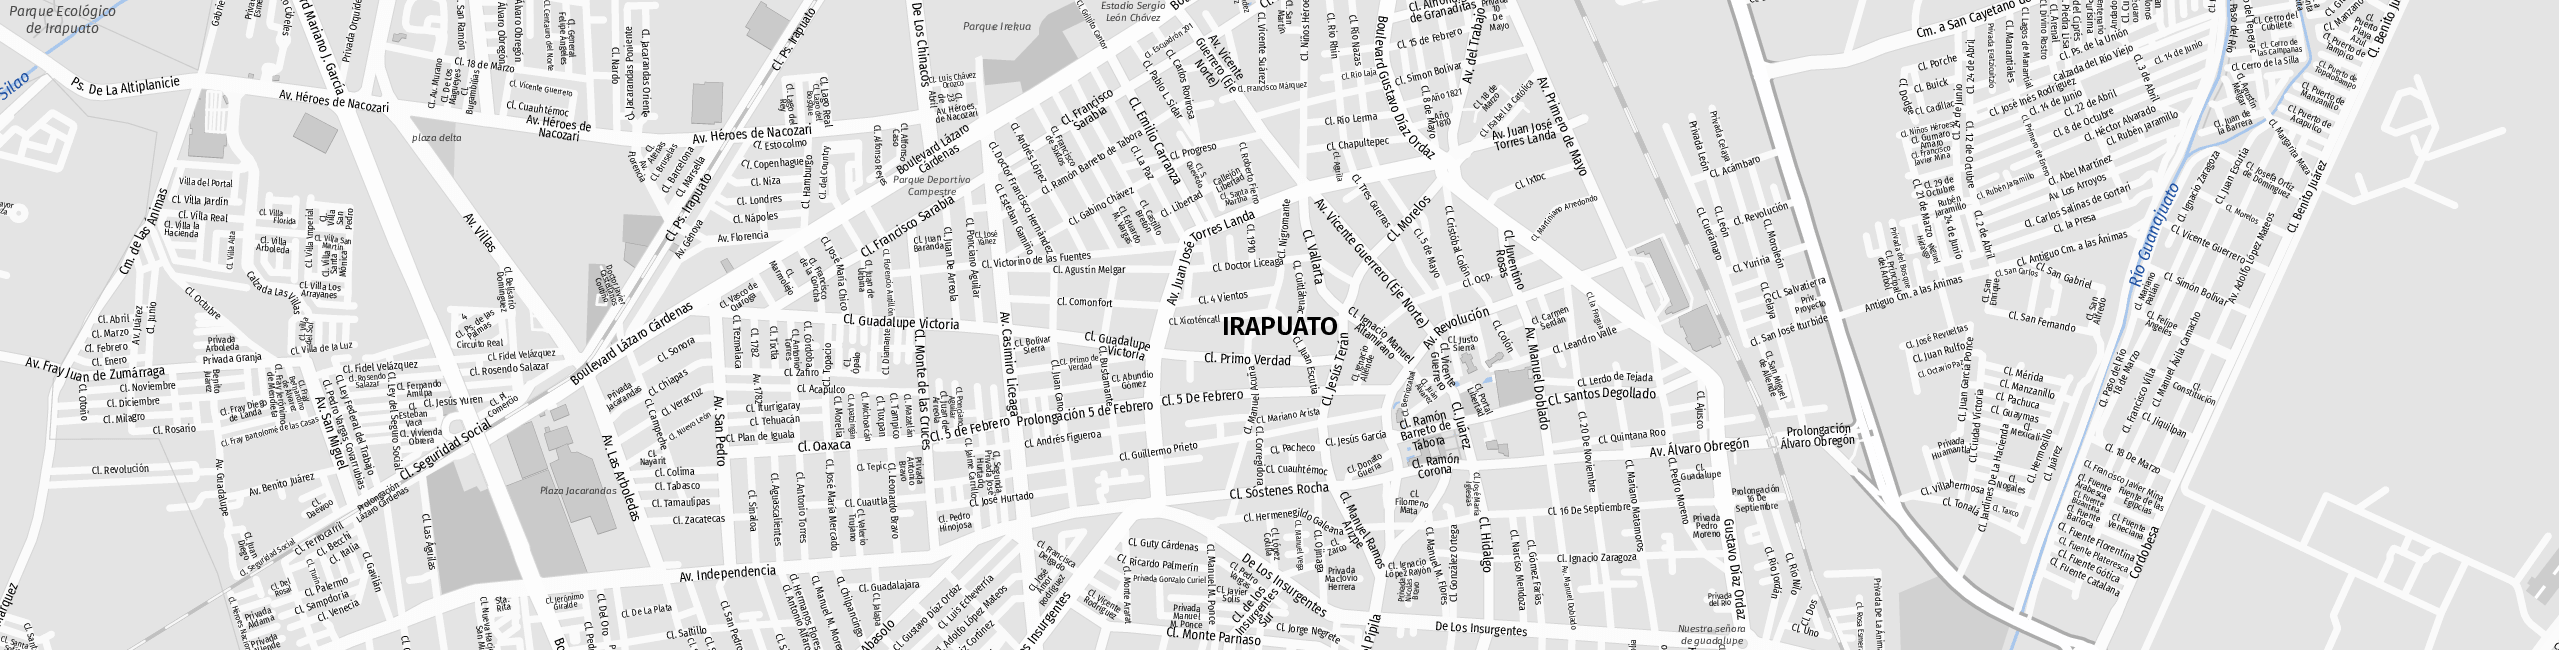 Stadtplan Irapuato zum Downloaden.